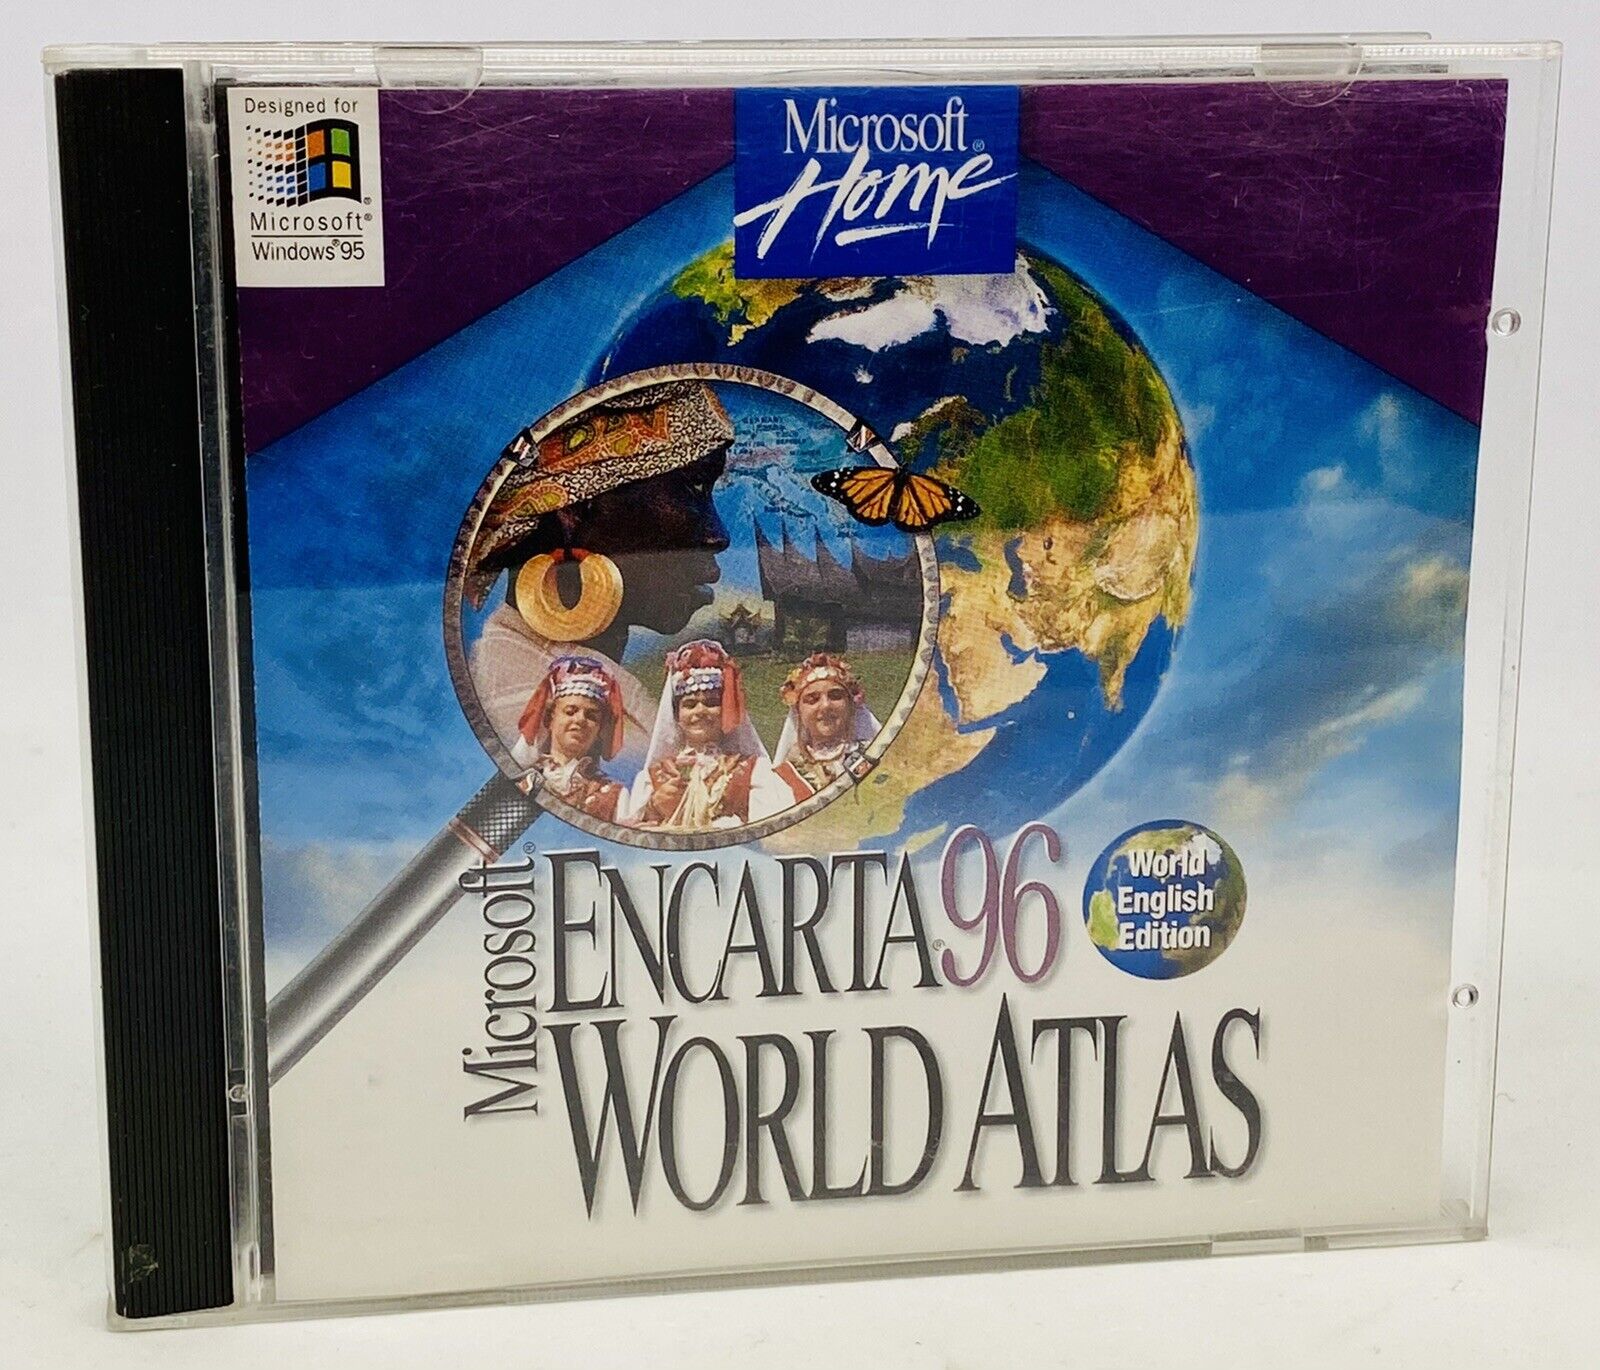 Vintage Microsoft Home Encarta 96 World Atlas - Windows 95 on CD ROM